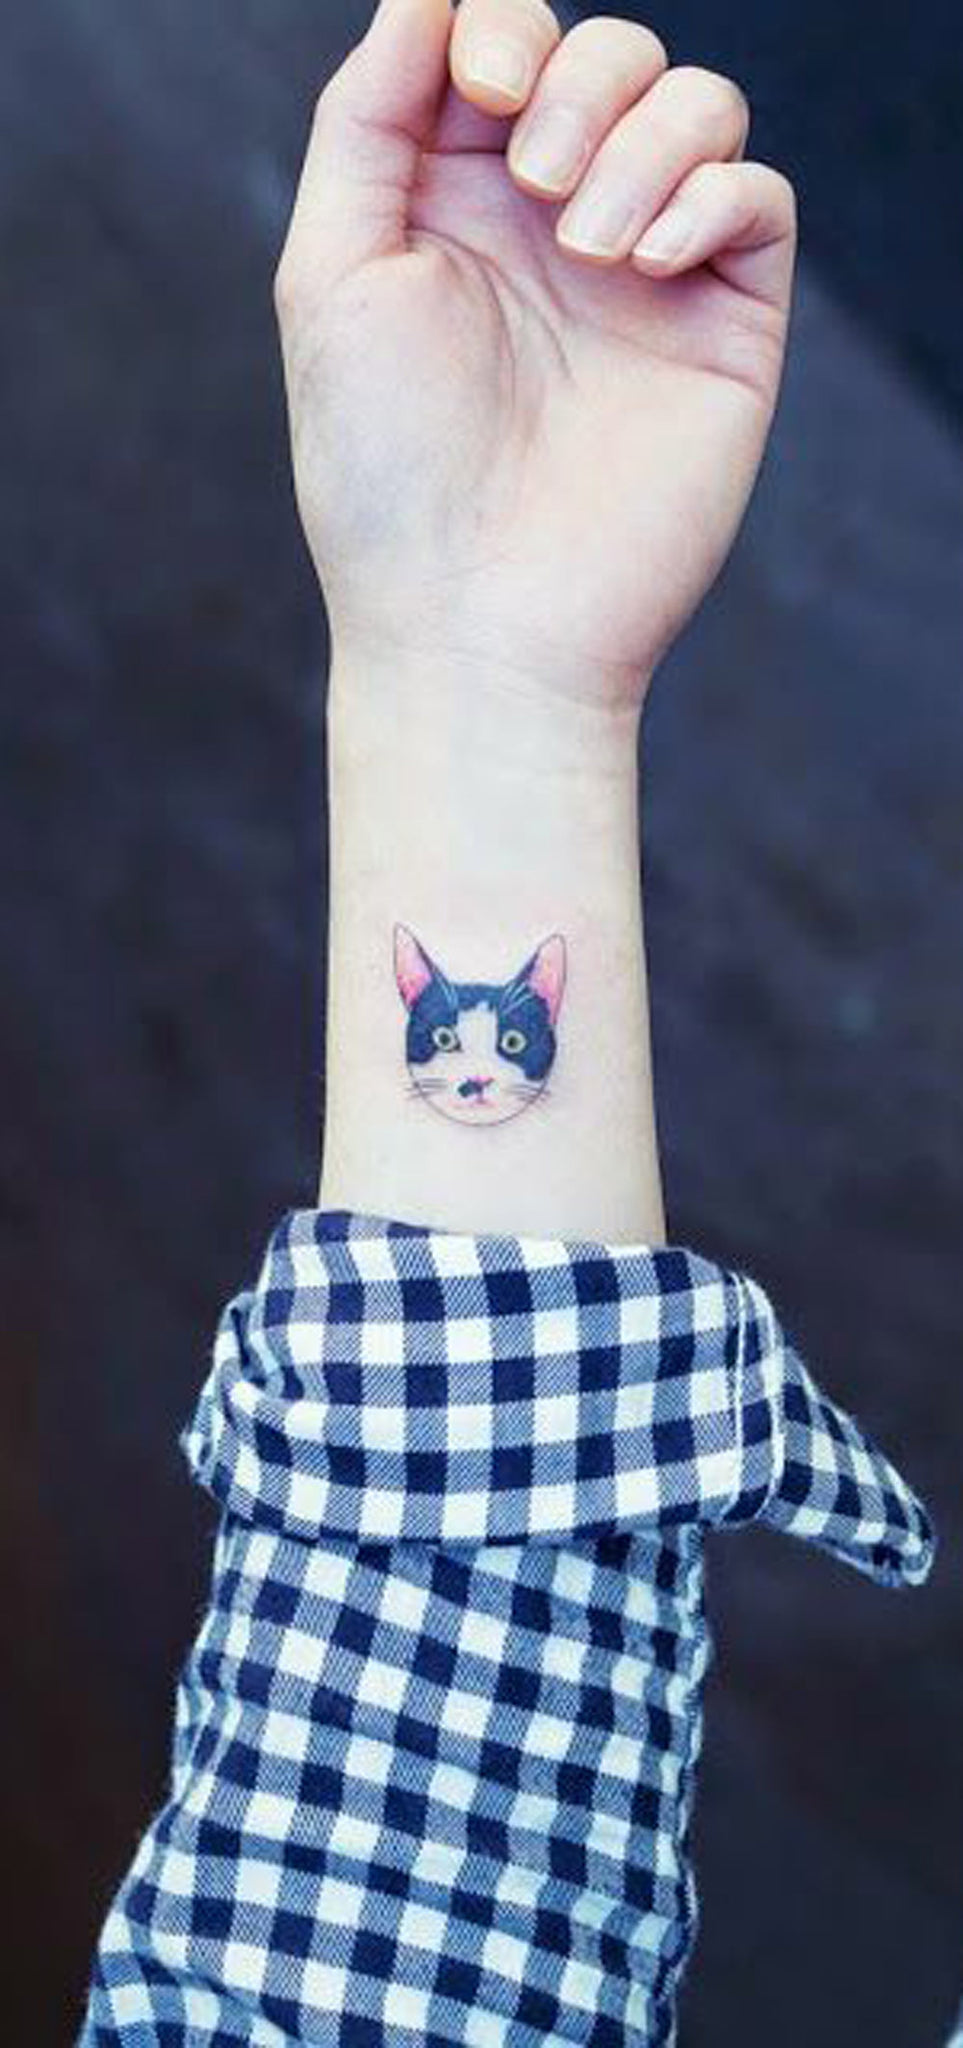 Realistic Traditional Black and White Wrist Tattoo Ideas for Women - Cute Kitty Inner Arm Tat - www.MyBodiArt.com